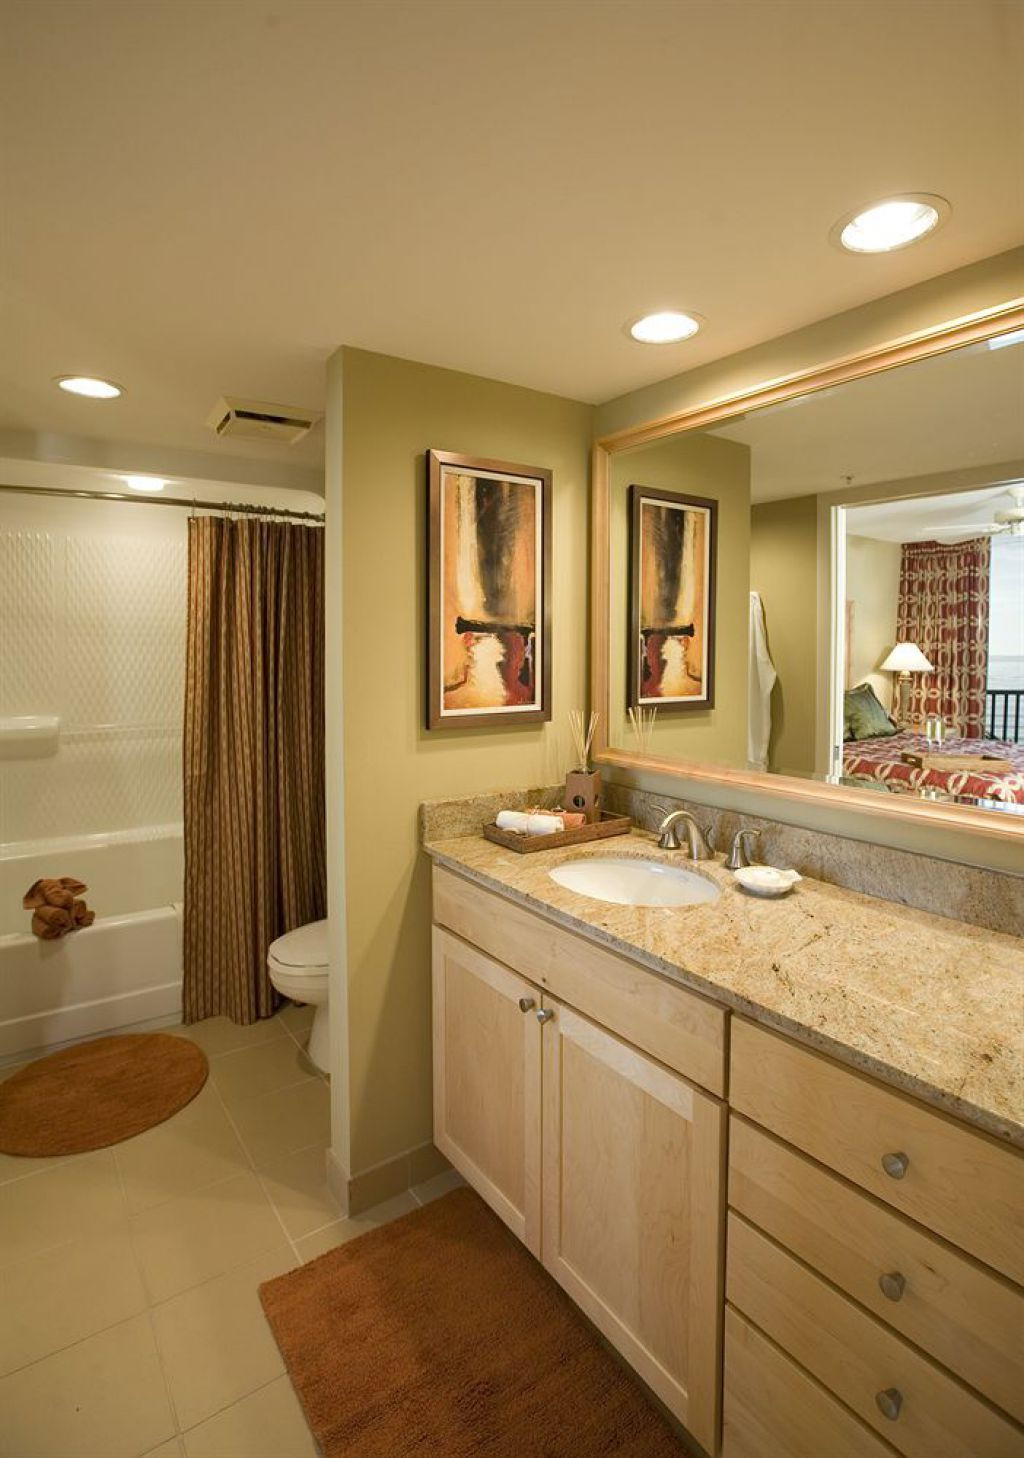 Recessed Lighting In Bathroom
 Improve Lighting In Your Home With Recessed Lighting in